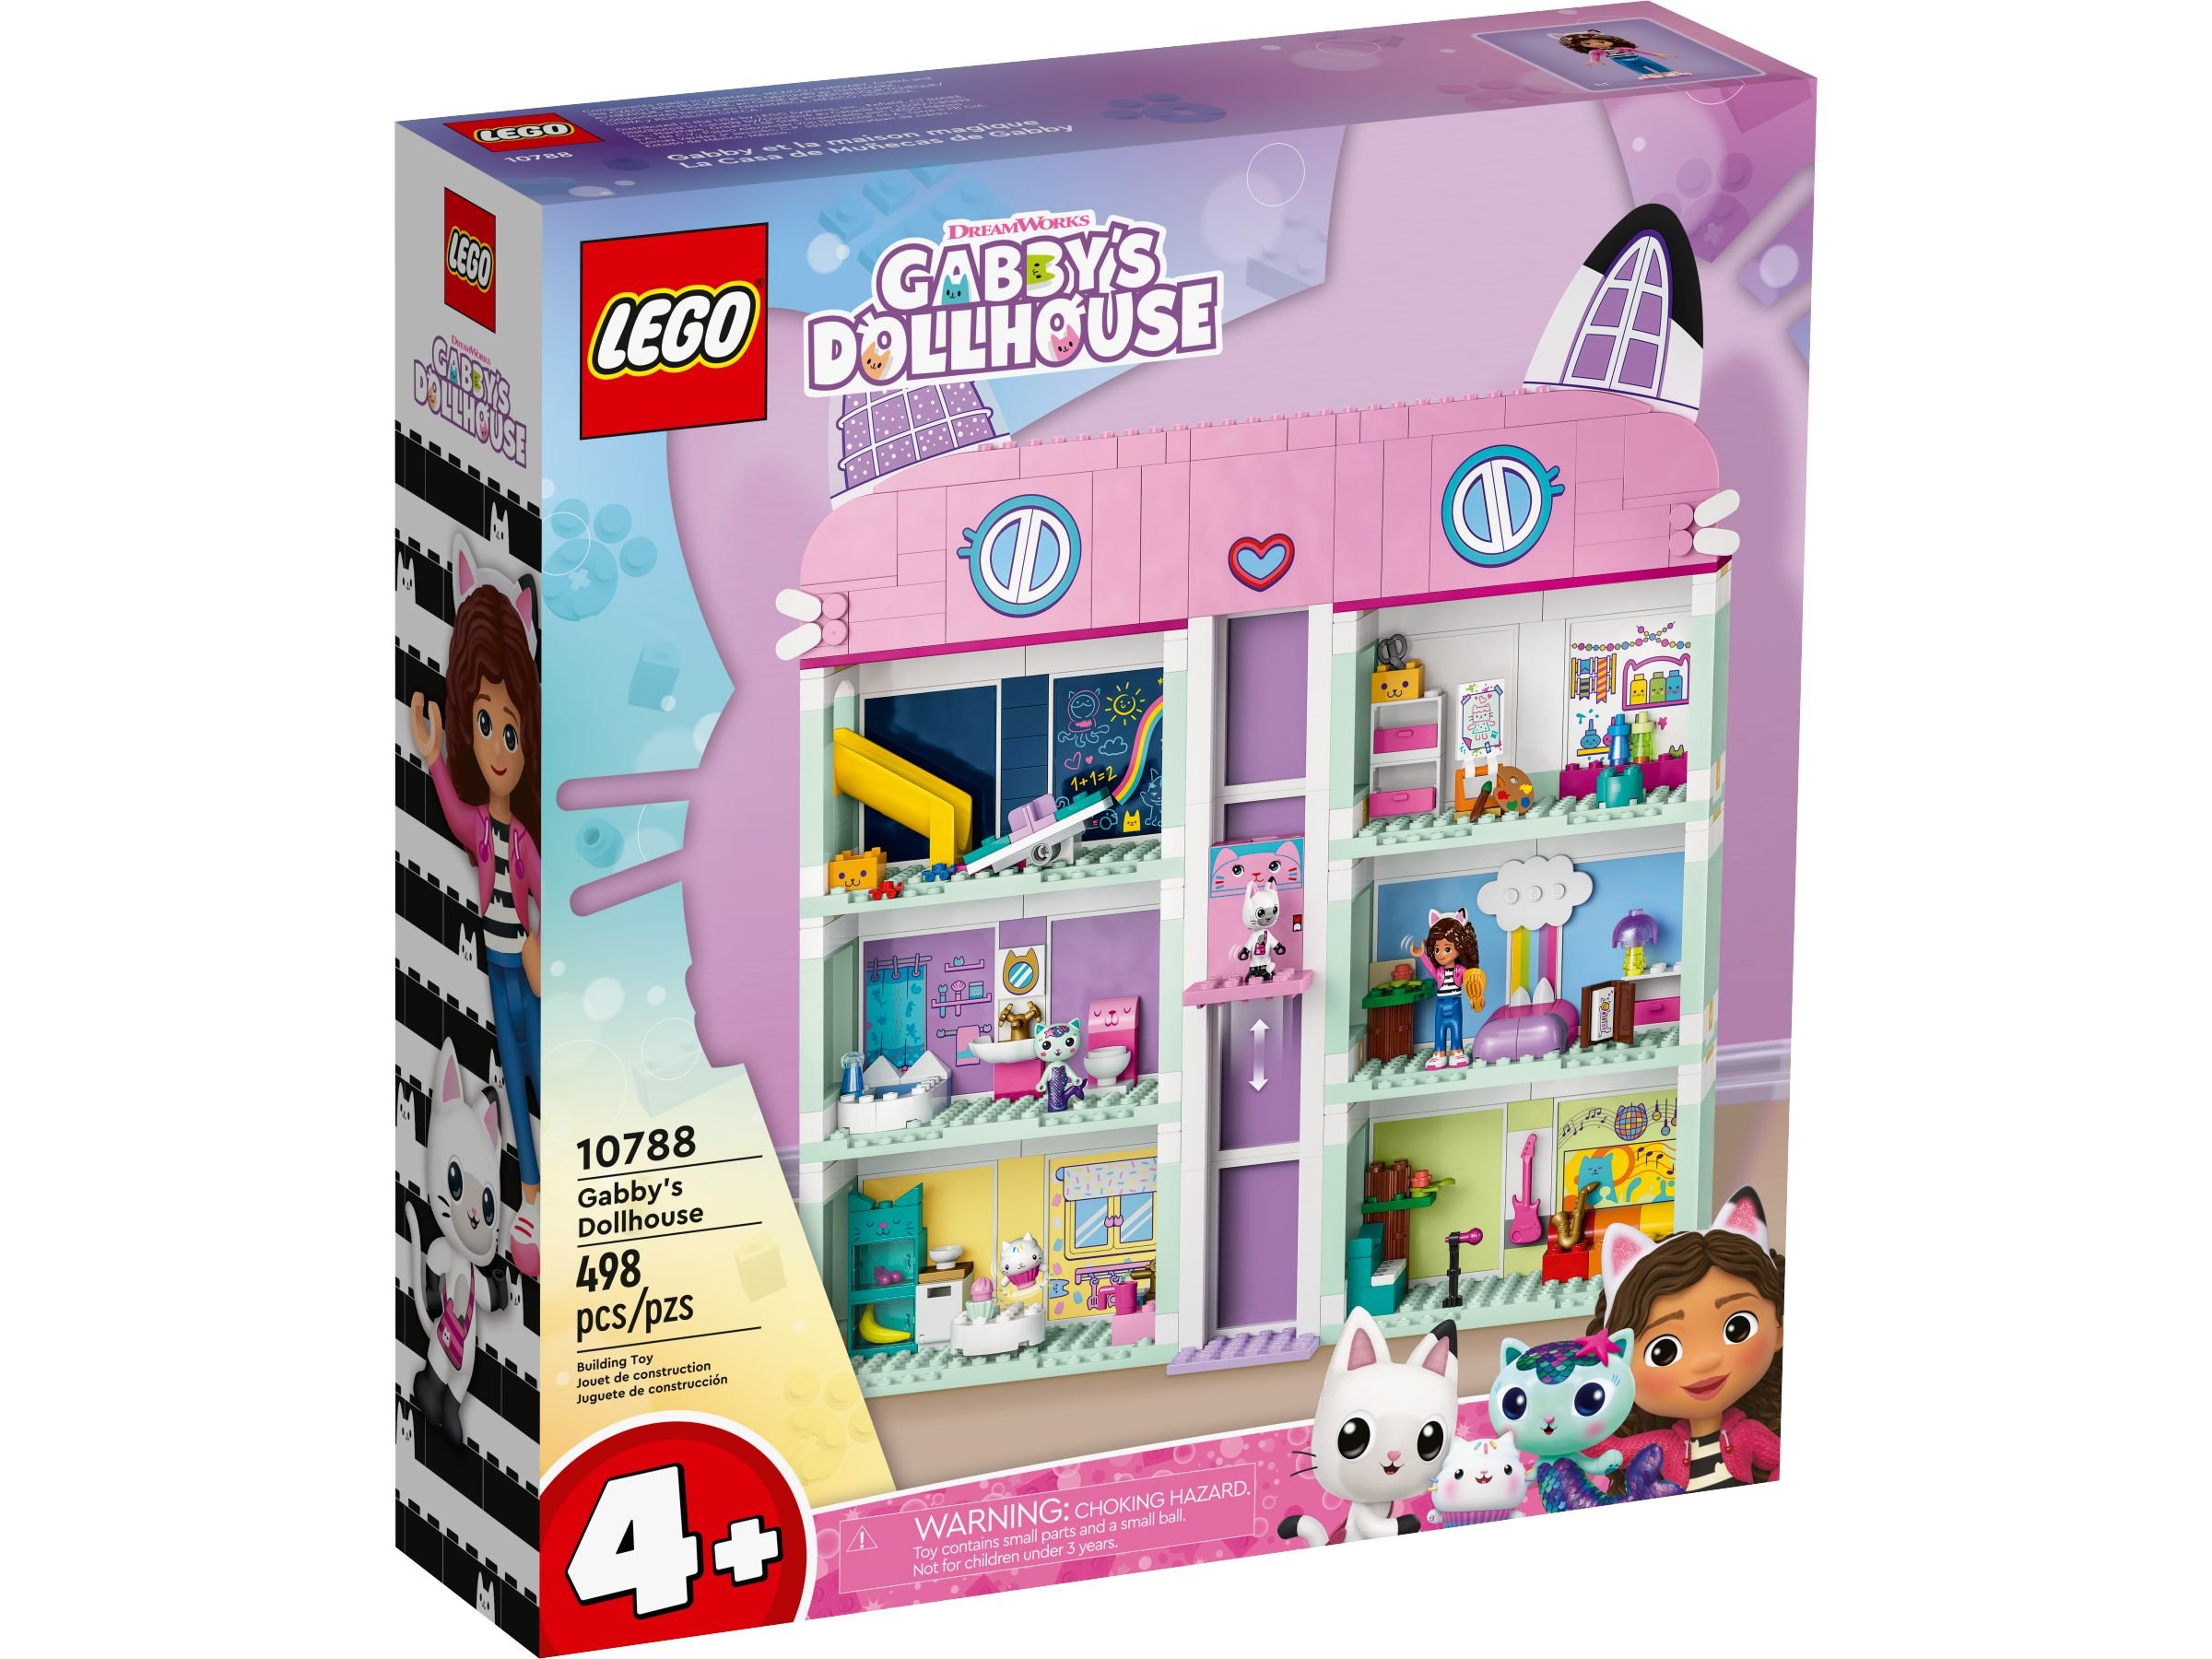 LEGO DreamWorks 10788 Gabbys Puppenhaus LEGO_10788_alt1.jpg